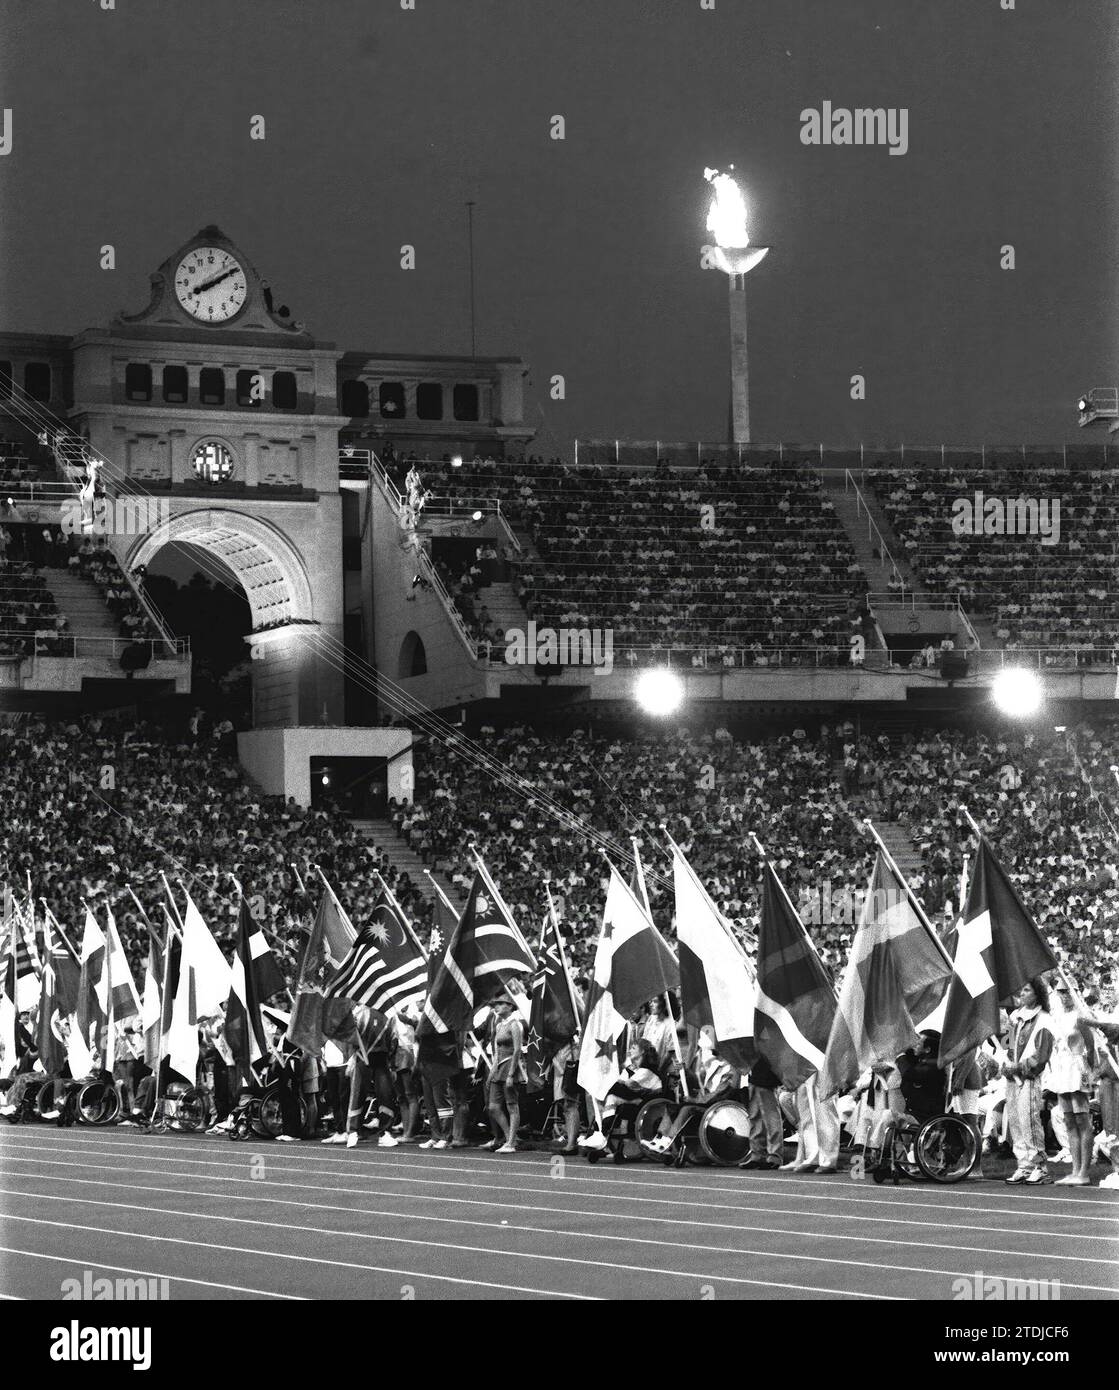 Barcelona..September 1992..Paralympic Games...Photo Jordi Romeu...Archdc.. Closing ceremony. Credit: Album / Archivo ABC / Jordi Romeu Stock Photo